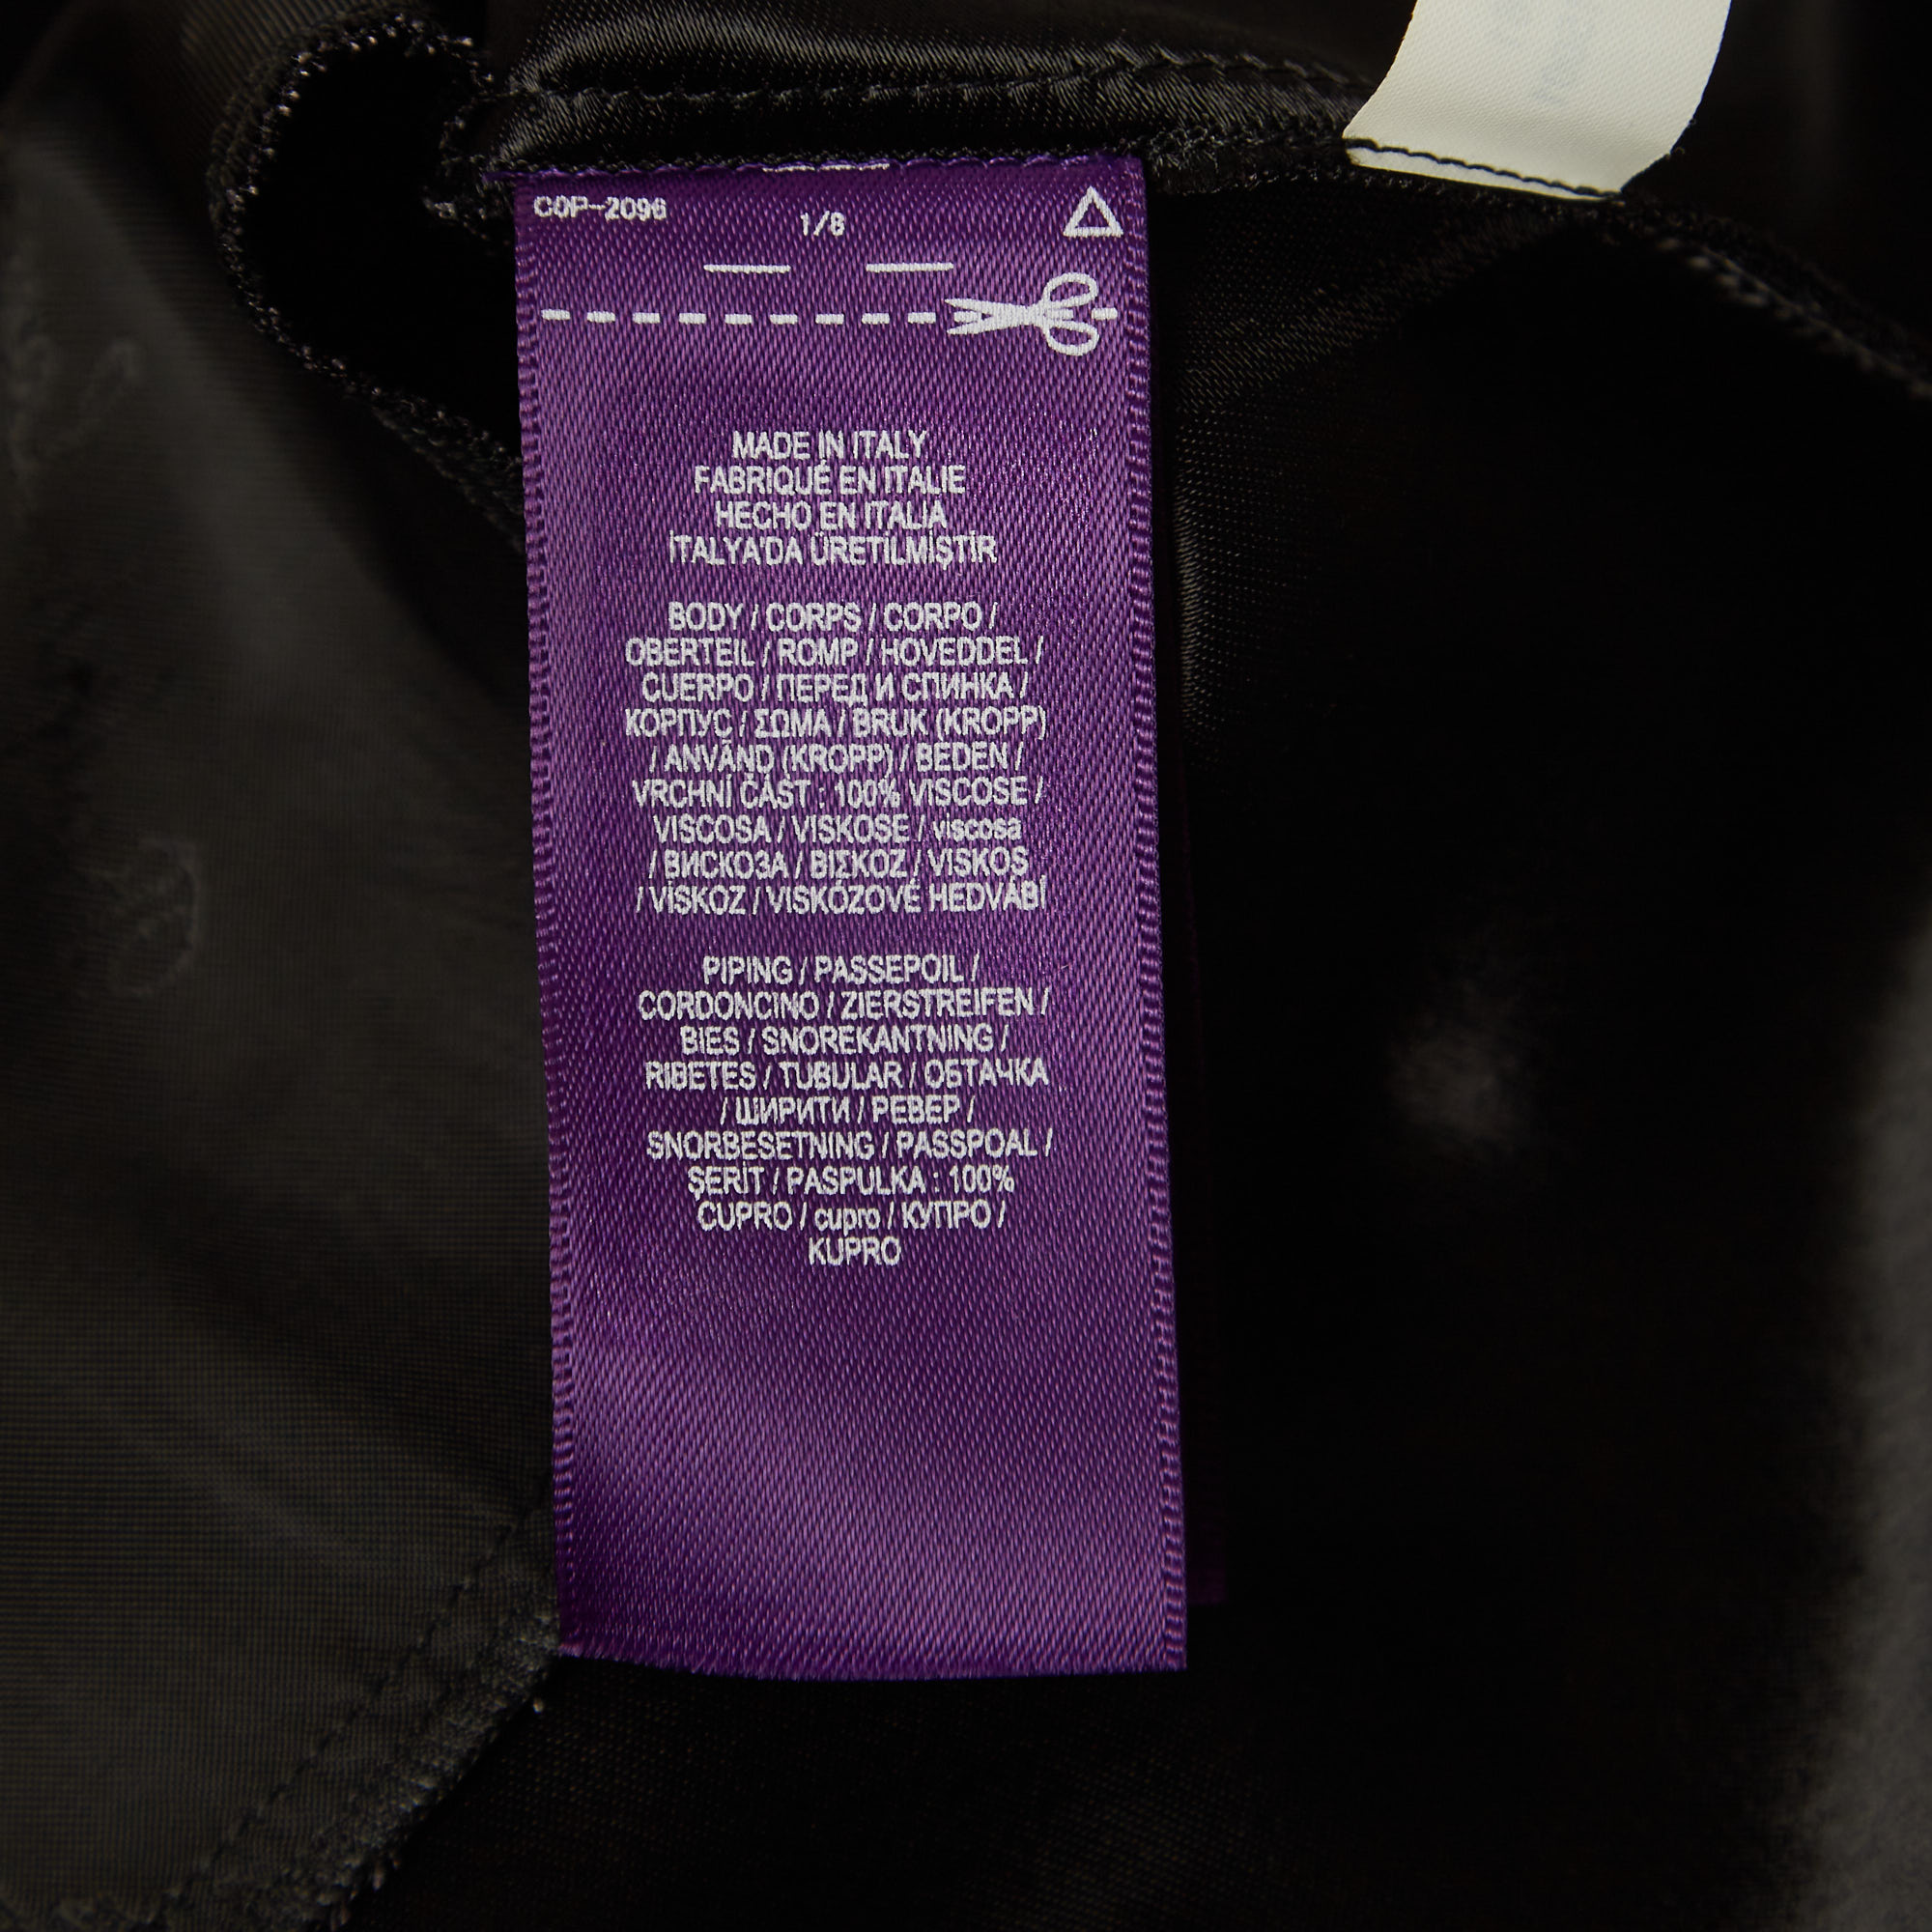 Ralph Lauren Purple Label Black Patterned Crepe Midi Skirt S